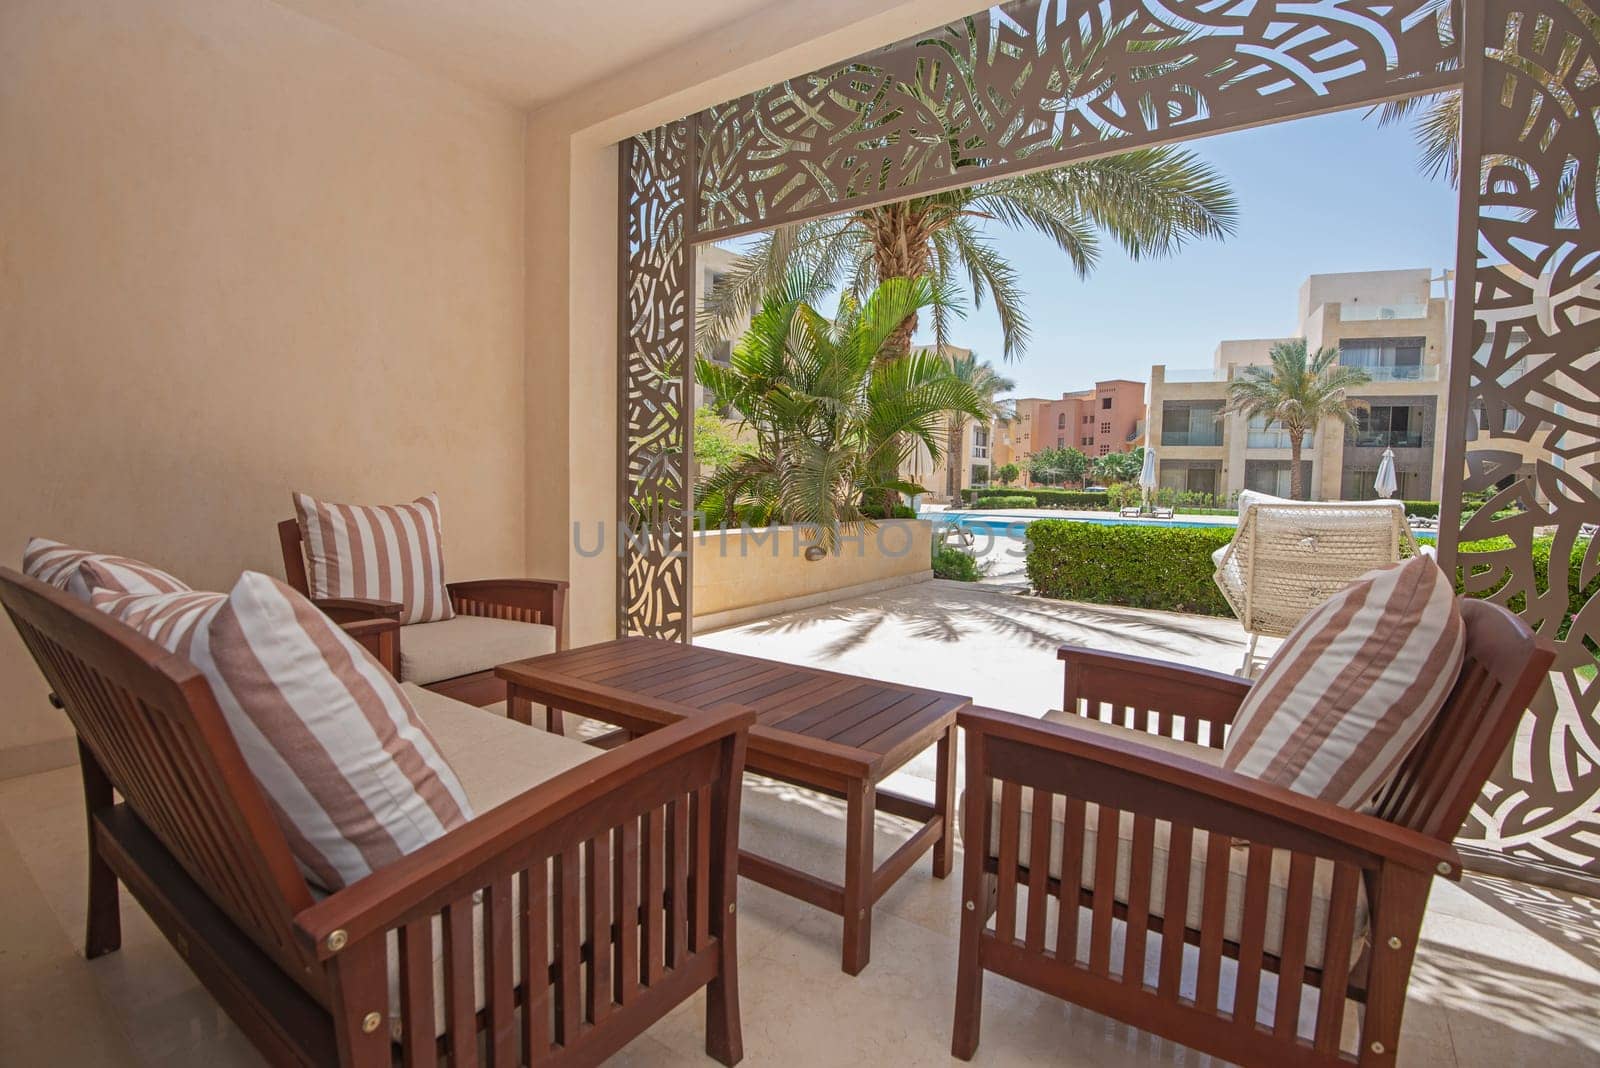 Patio terrace garden with chairs in tropical luxury apartment resort by paulvinten